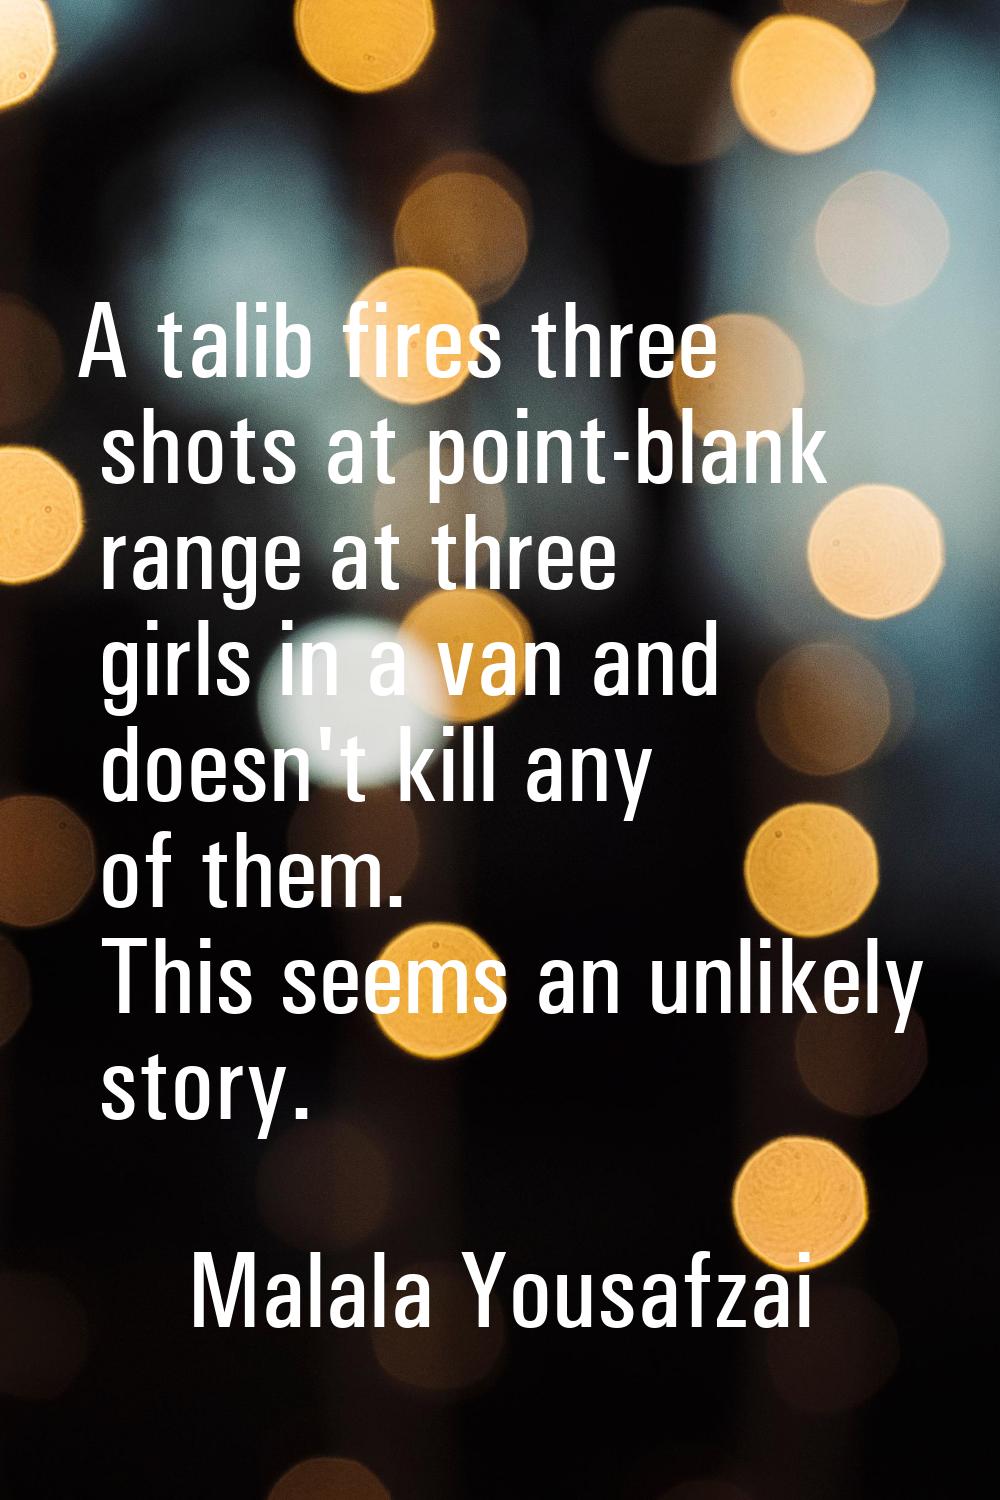 A talib fires three shots at point-blank range at three girls in a van and doesn't kill any of them